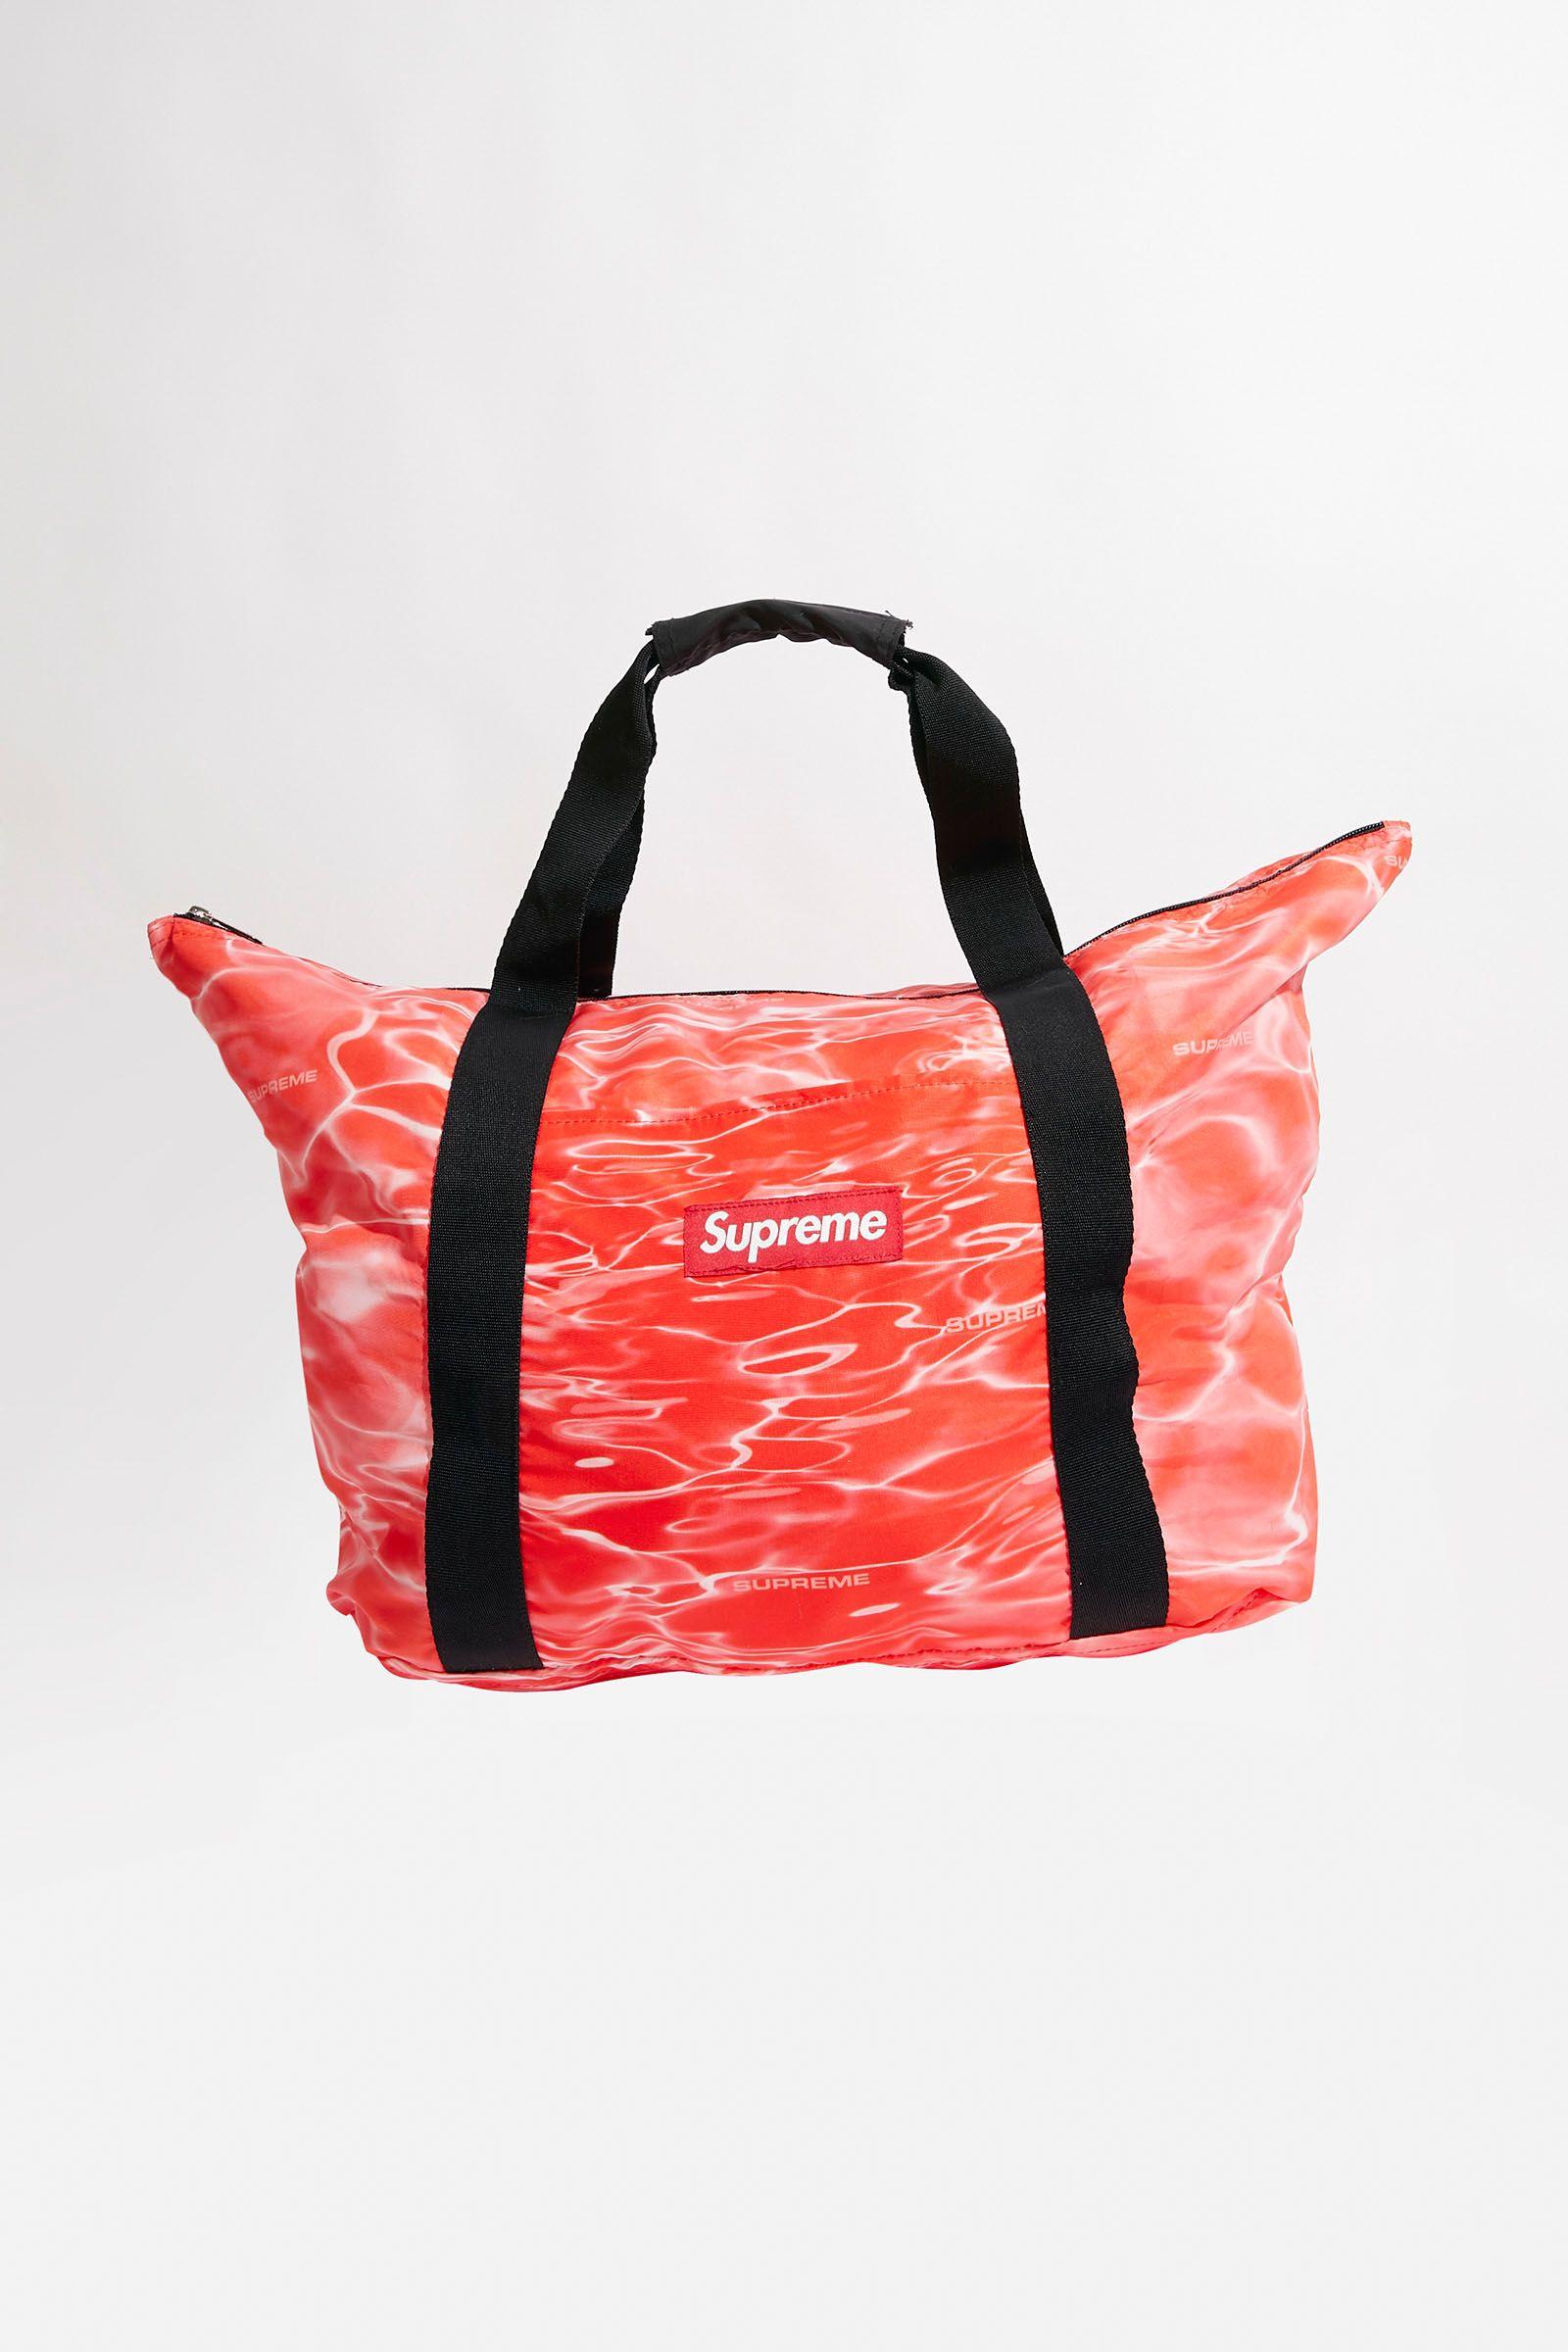 Supreme Bag Logo - Supreme Red Box Logo Water Ripple Print Tote Bag